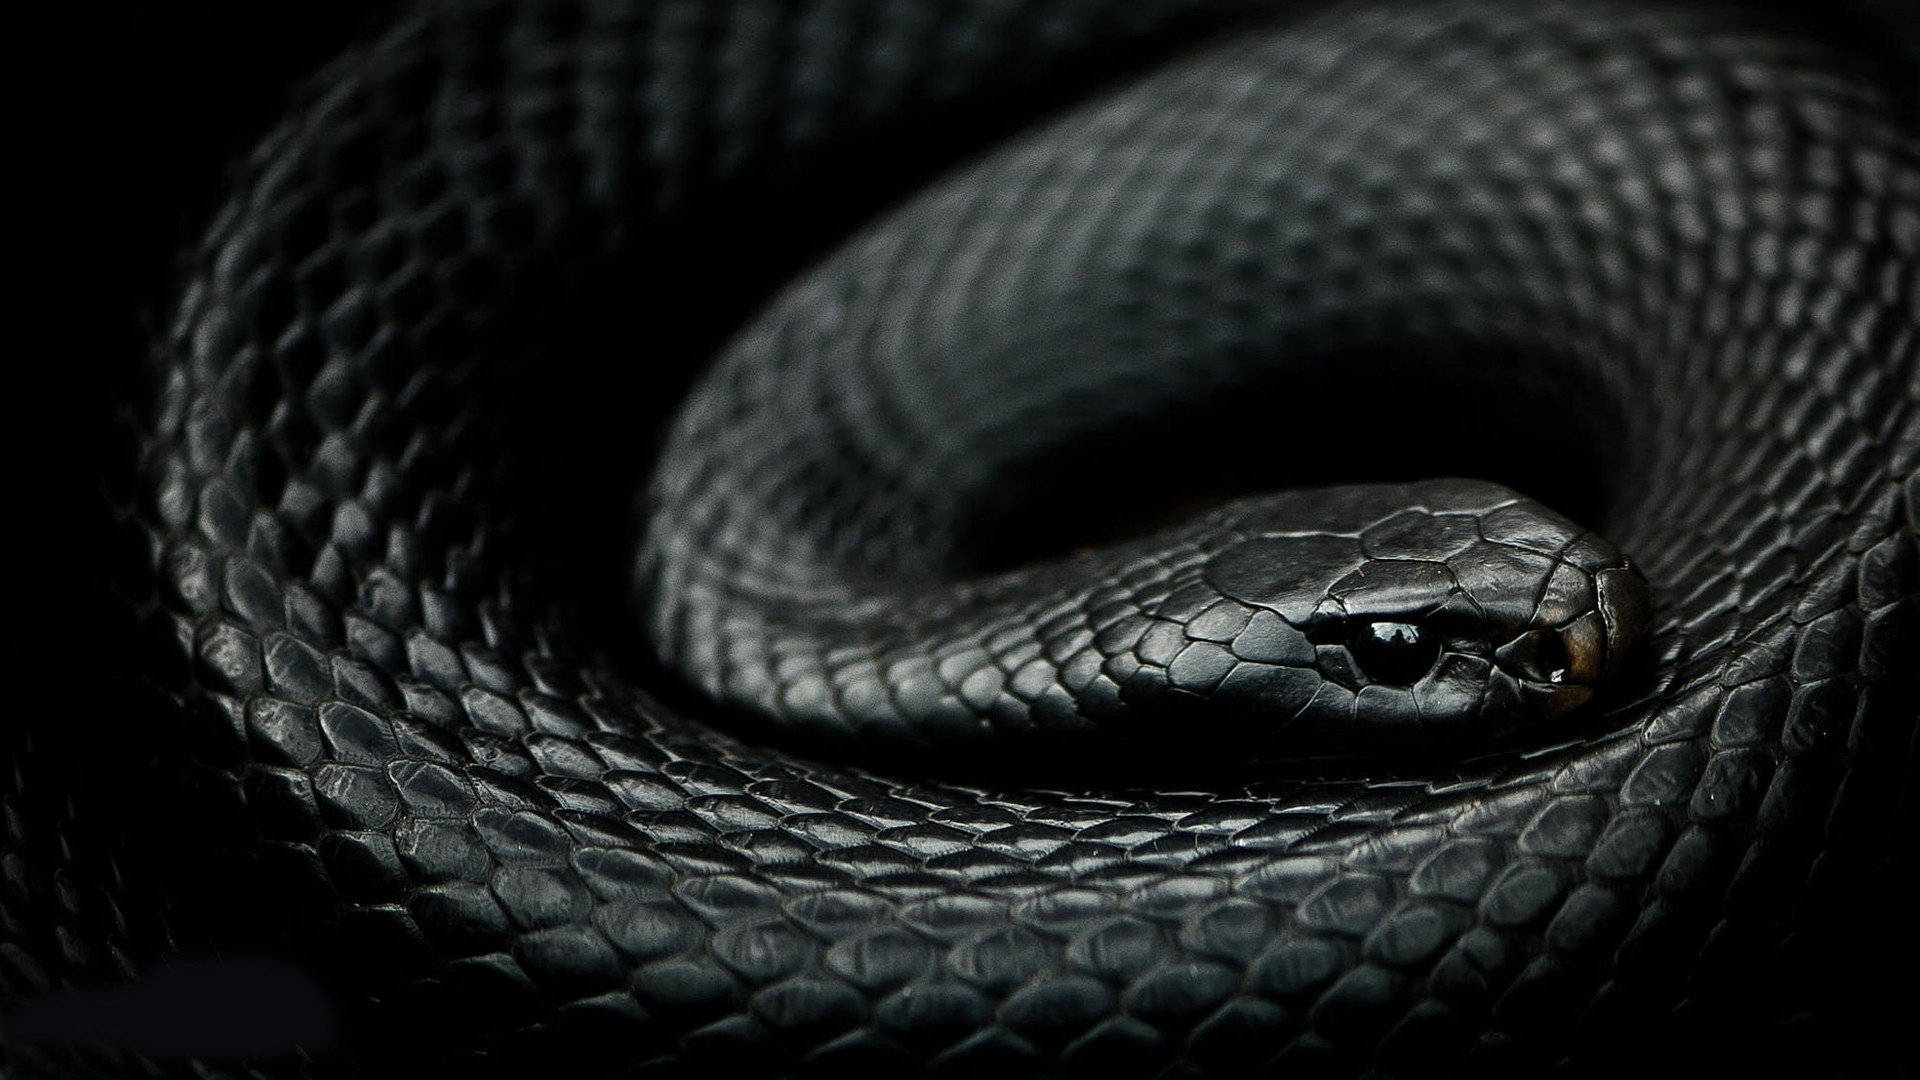 Midnight Black Scales Black Mamba Snake Wallpaper